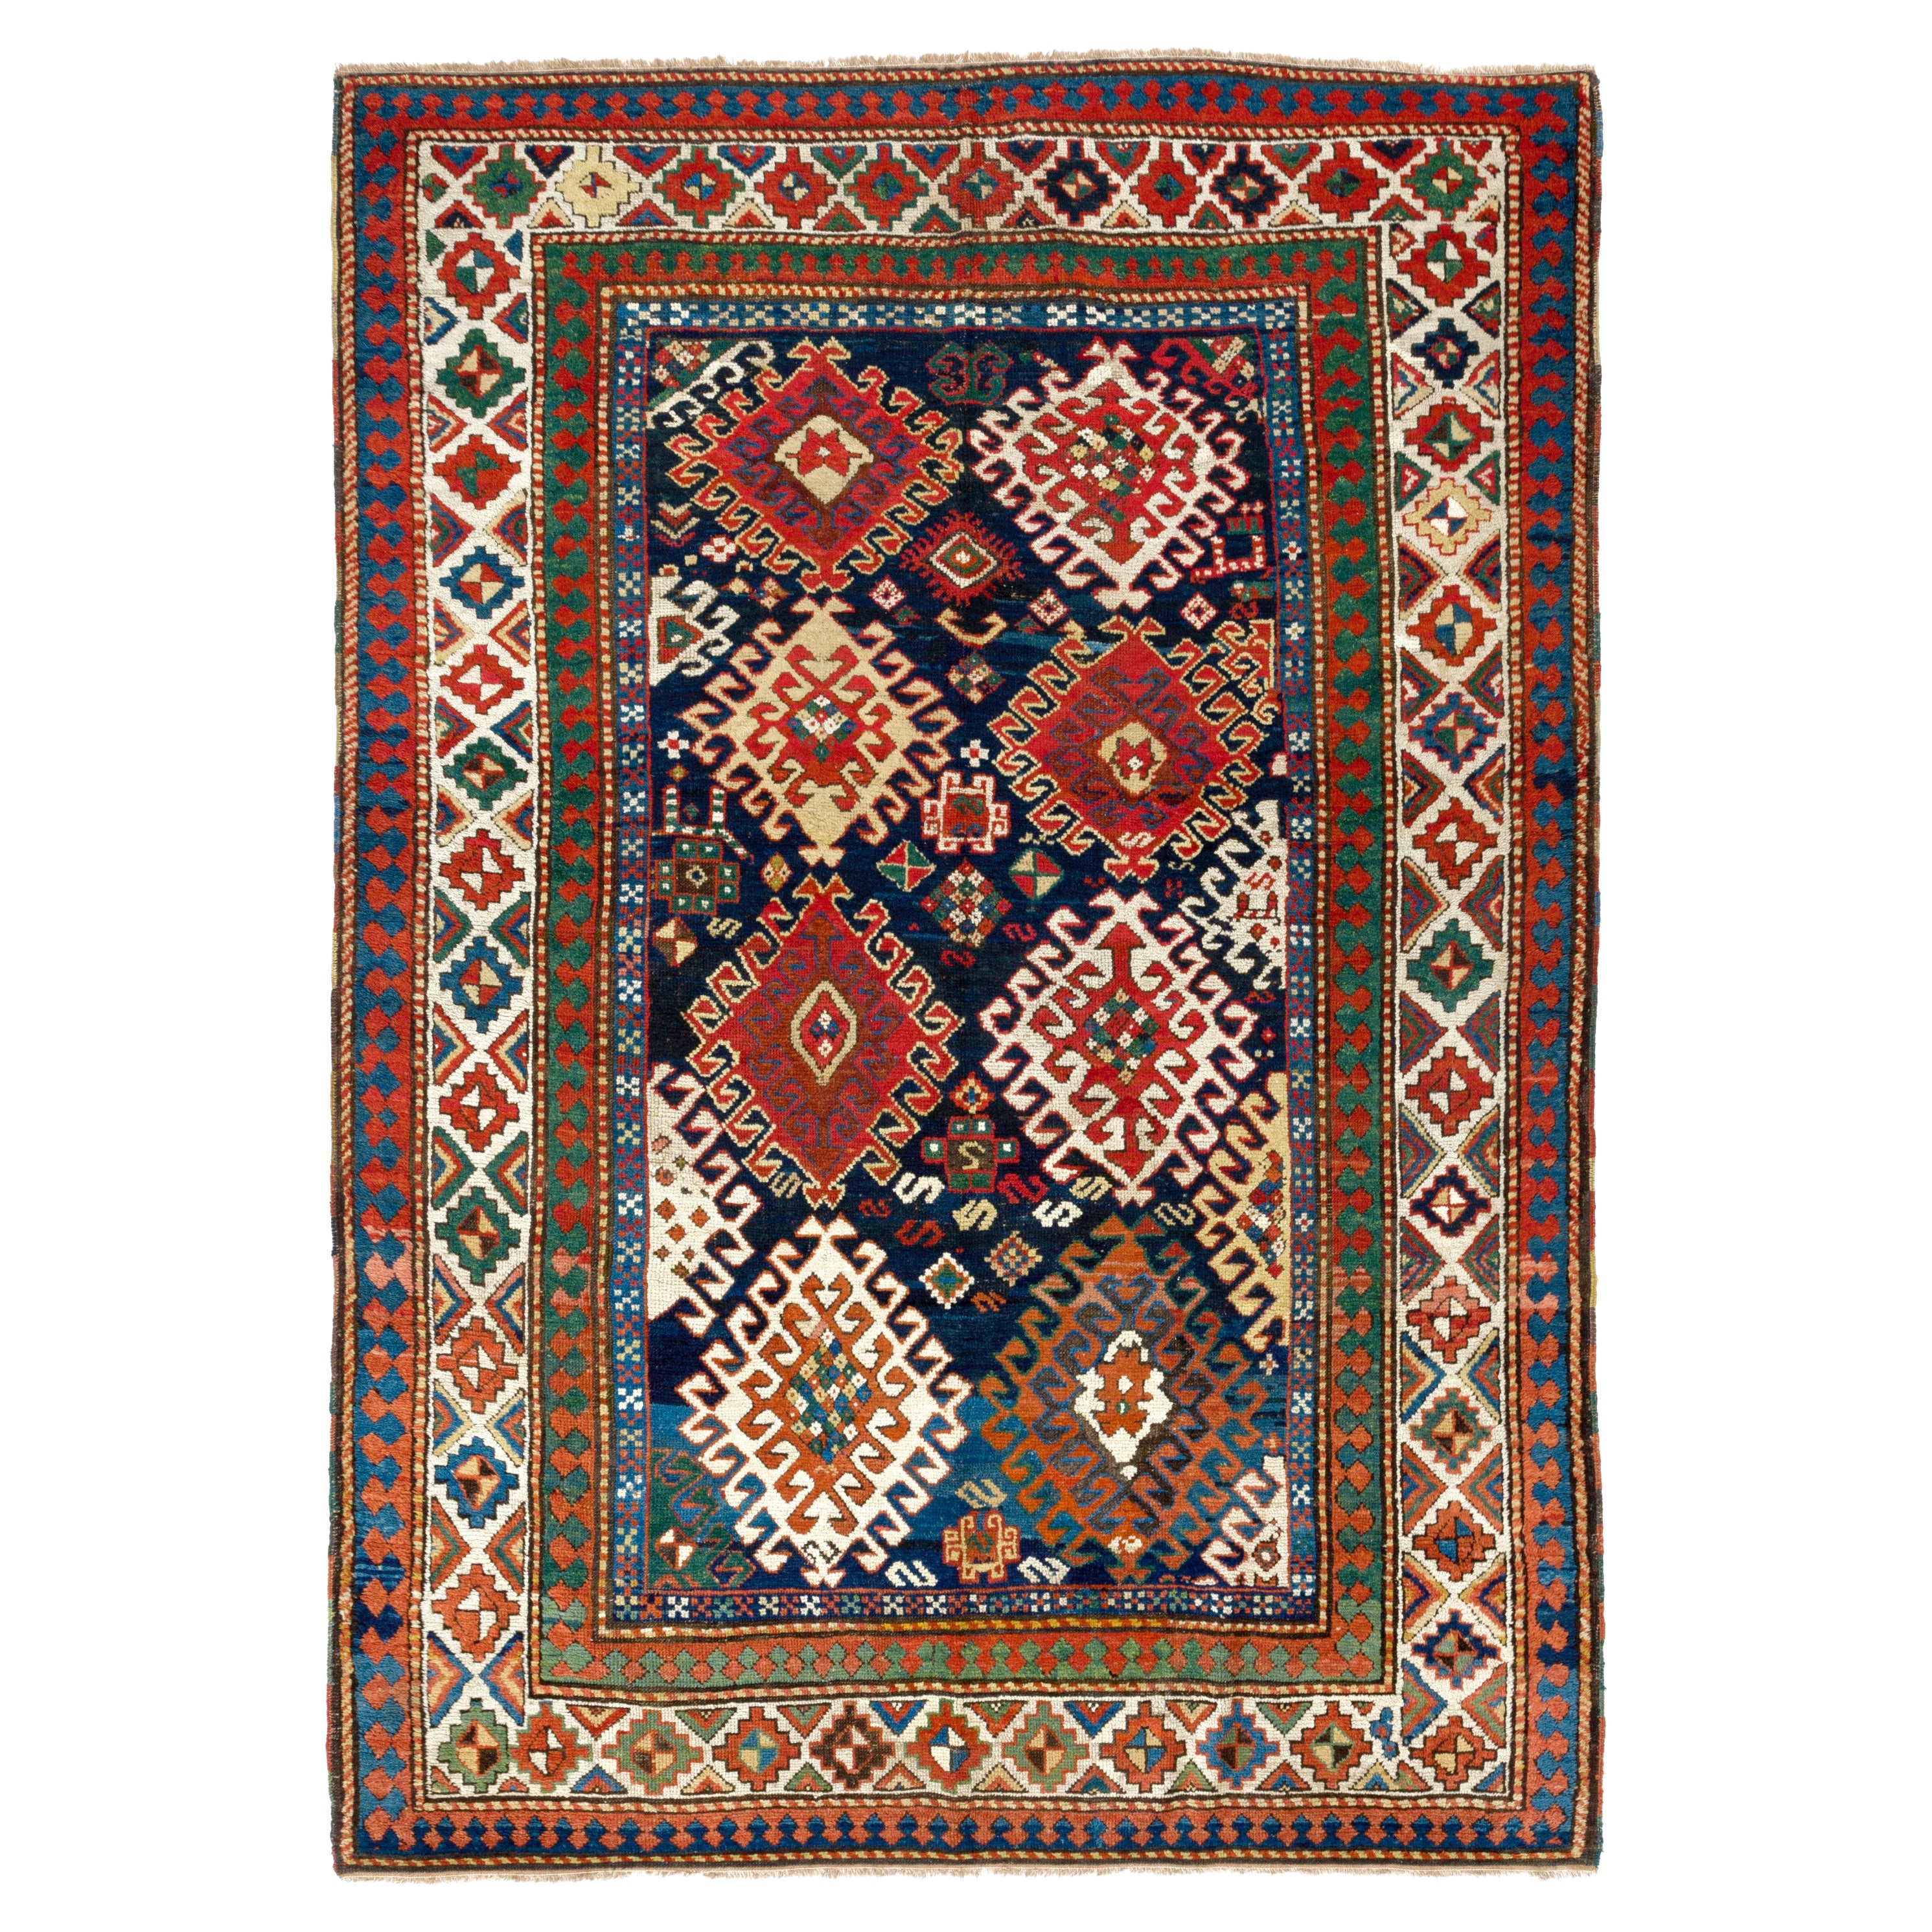 5'3" x 7'7" Antiker kaukasischer Bordjalou-Kazak-Teppich, um 1870